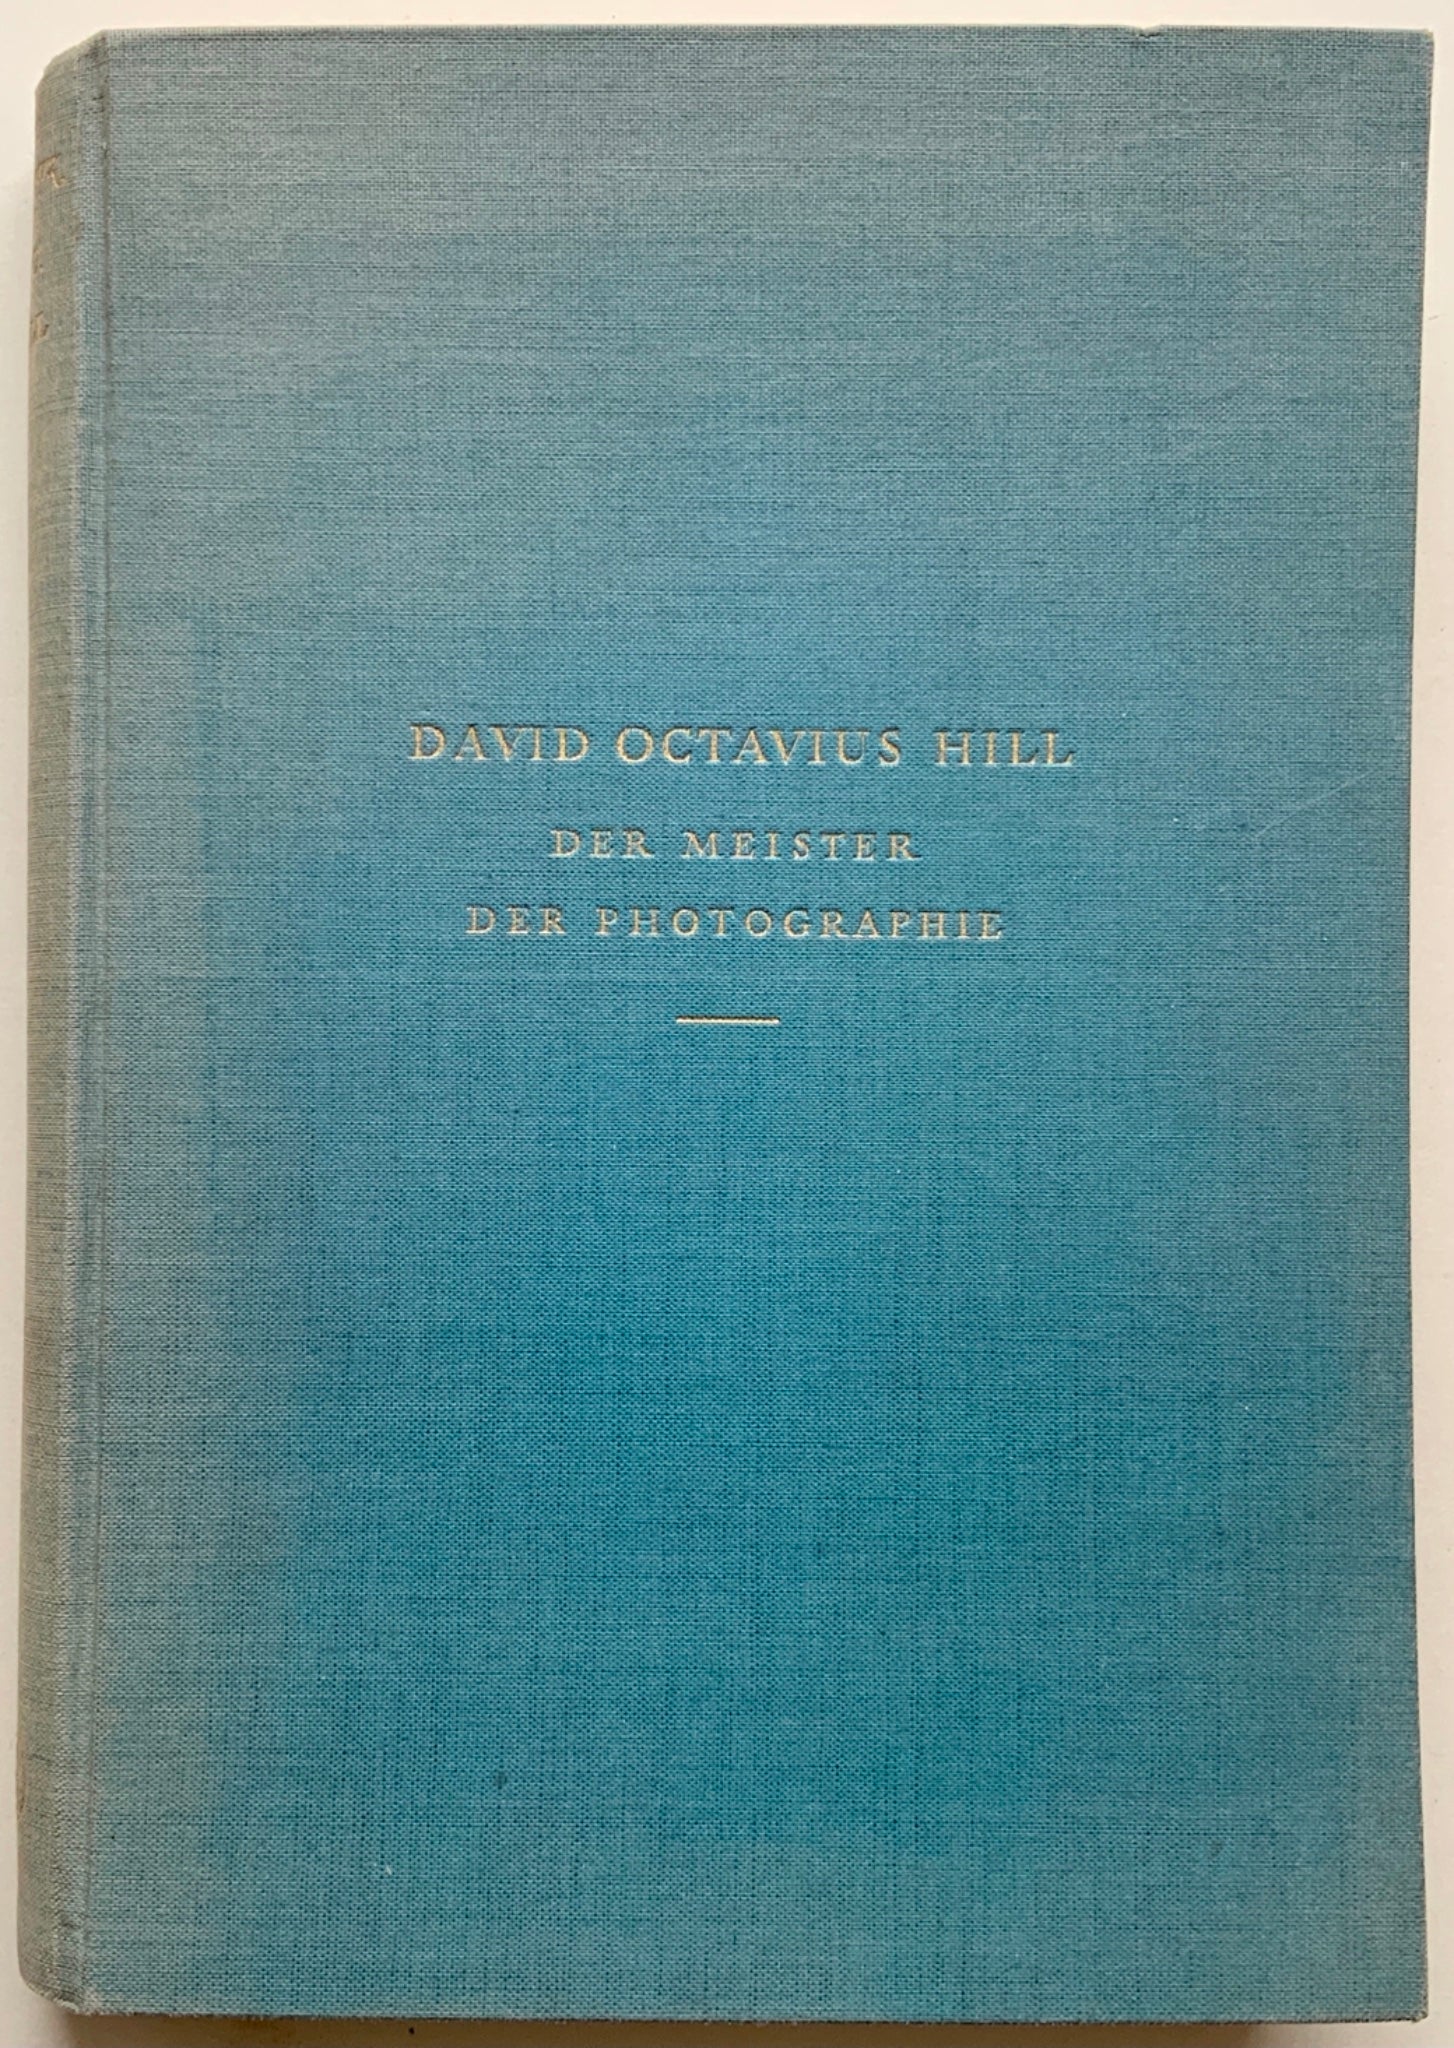 1931 H. Schwarz DAVID OCTAVIUS HILL 80 Taf. Erste Ausgabe - Photography - Book